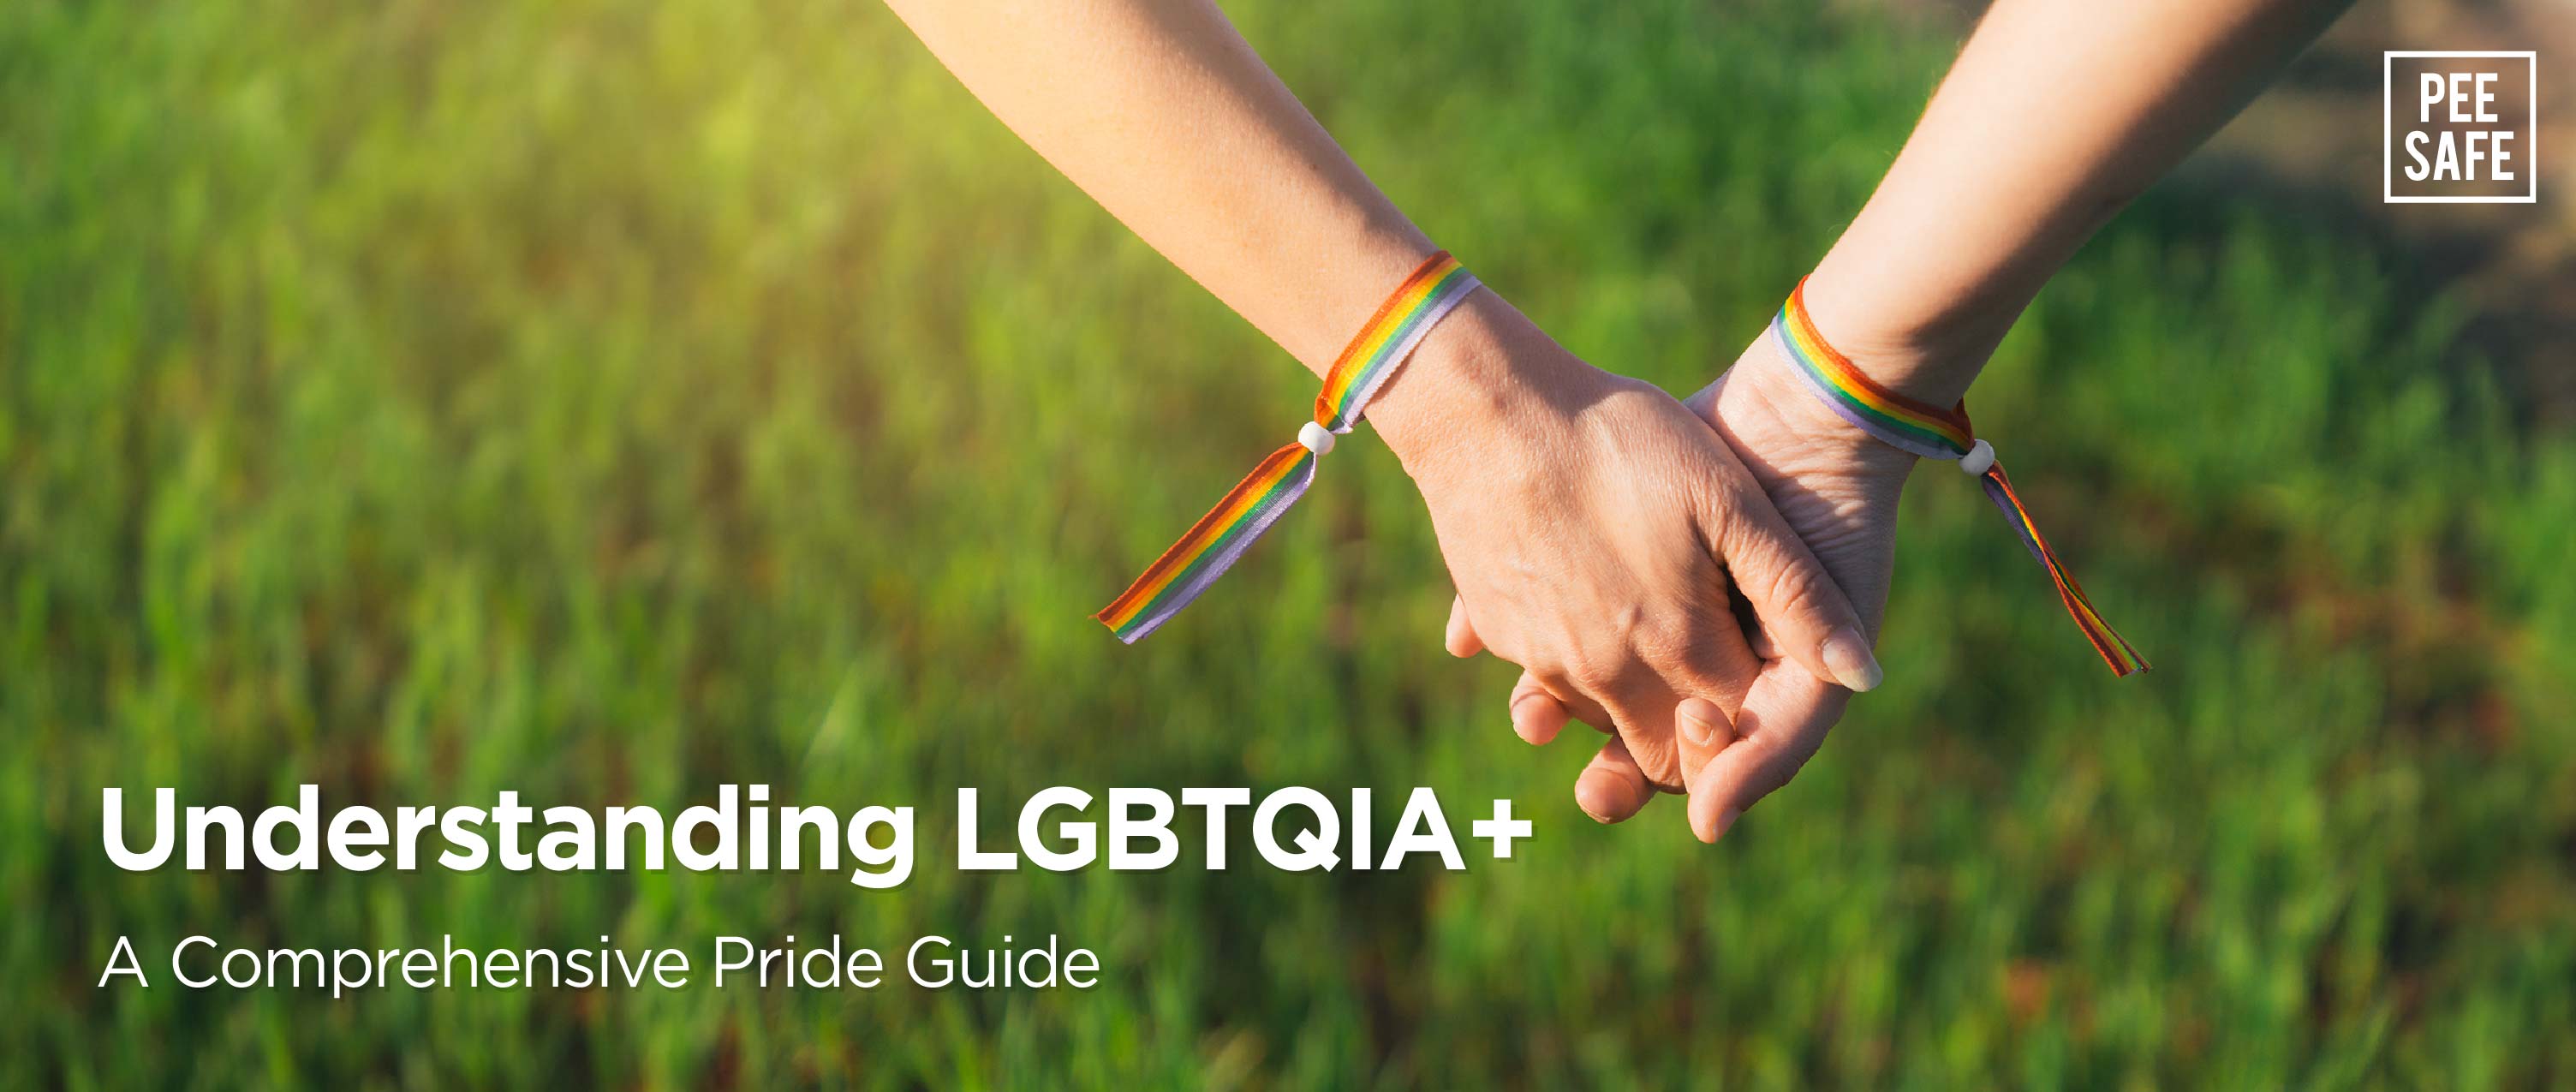 Understanding LGBTQIA+: A Comprehensive Pride Guide!